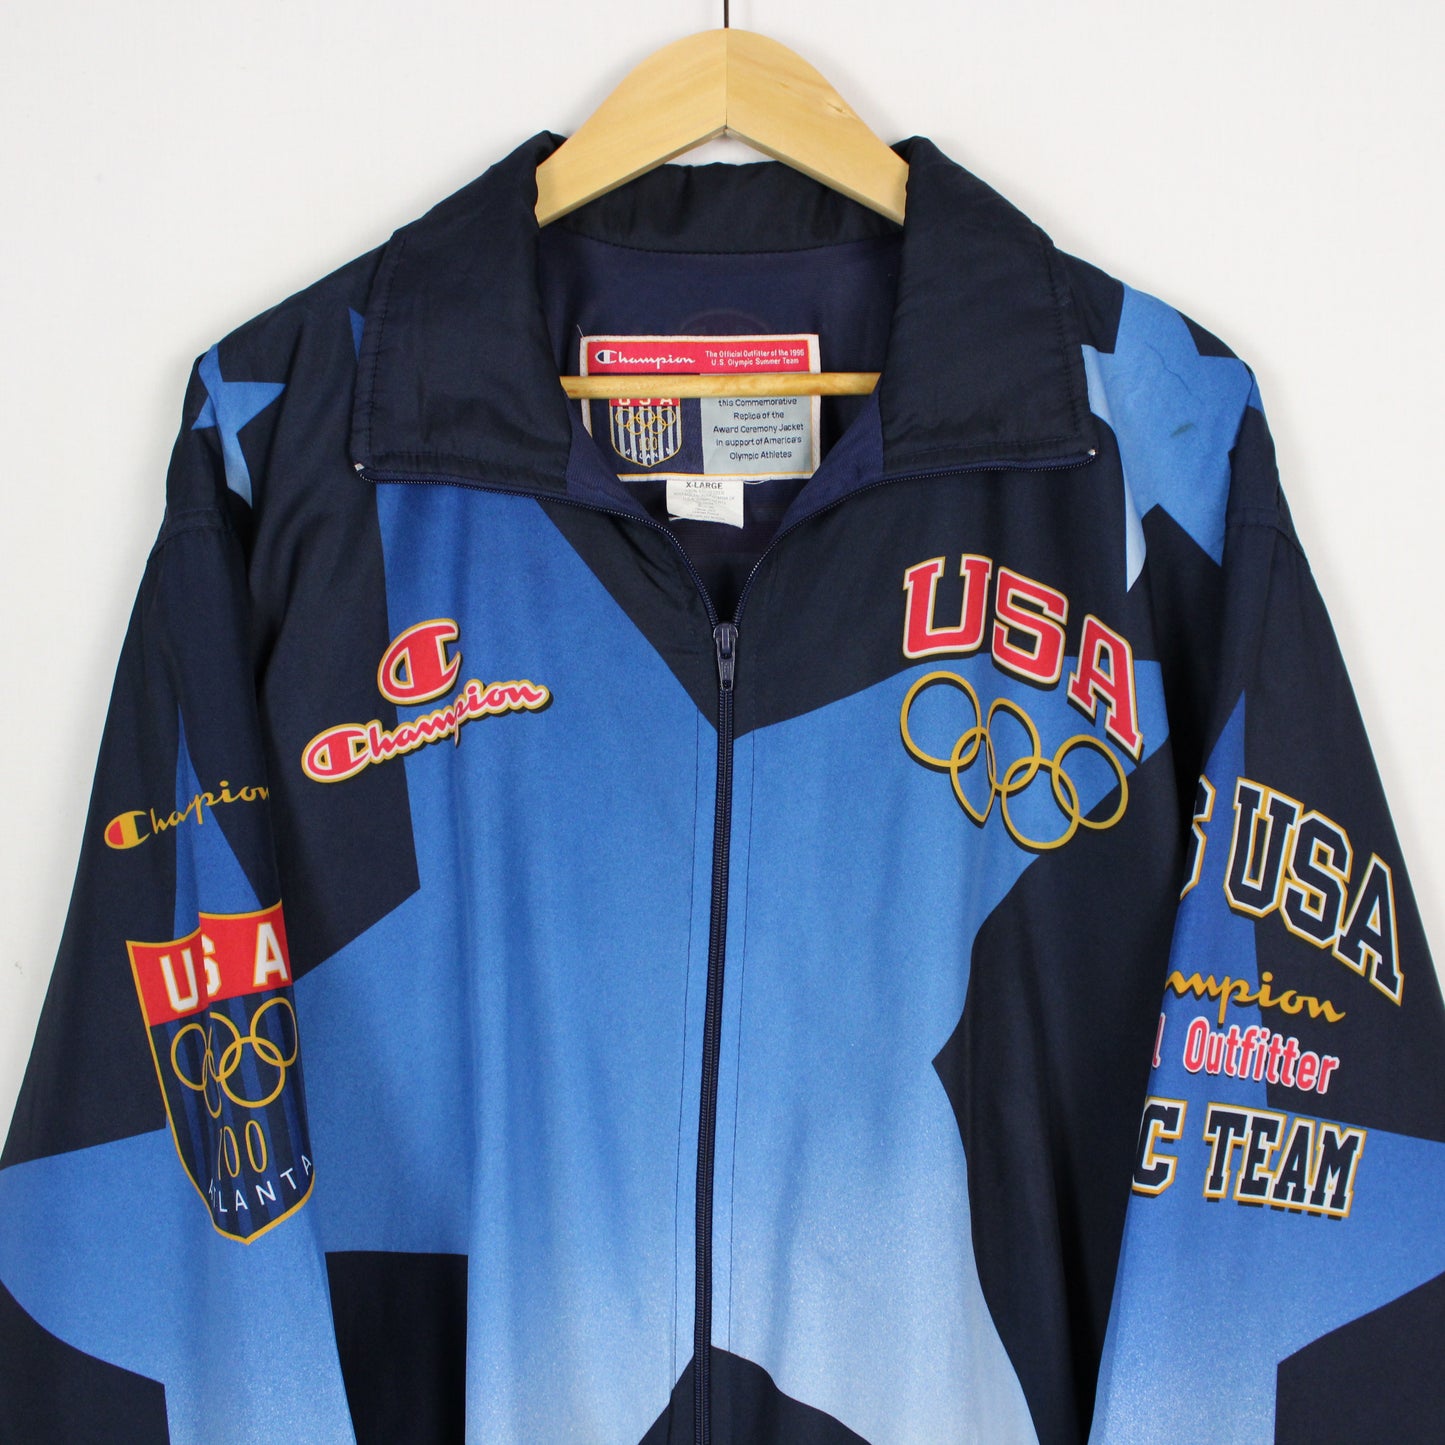 Vintage 1996 Atlanta Olympics Team USA Champion Jacket - XL